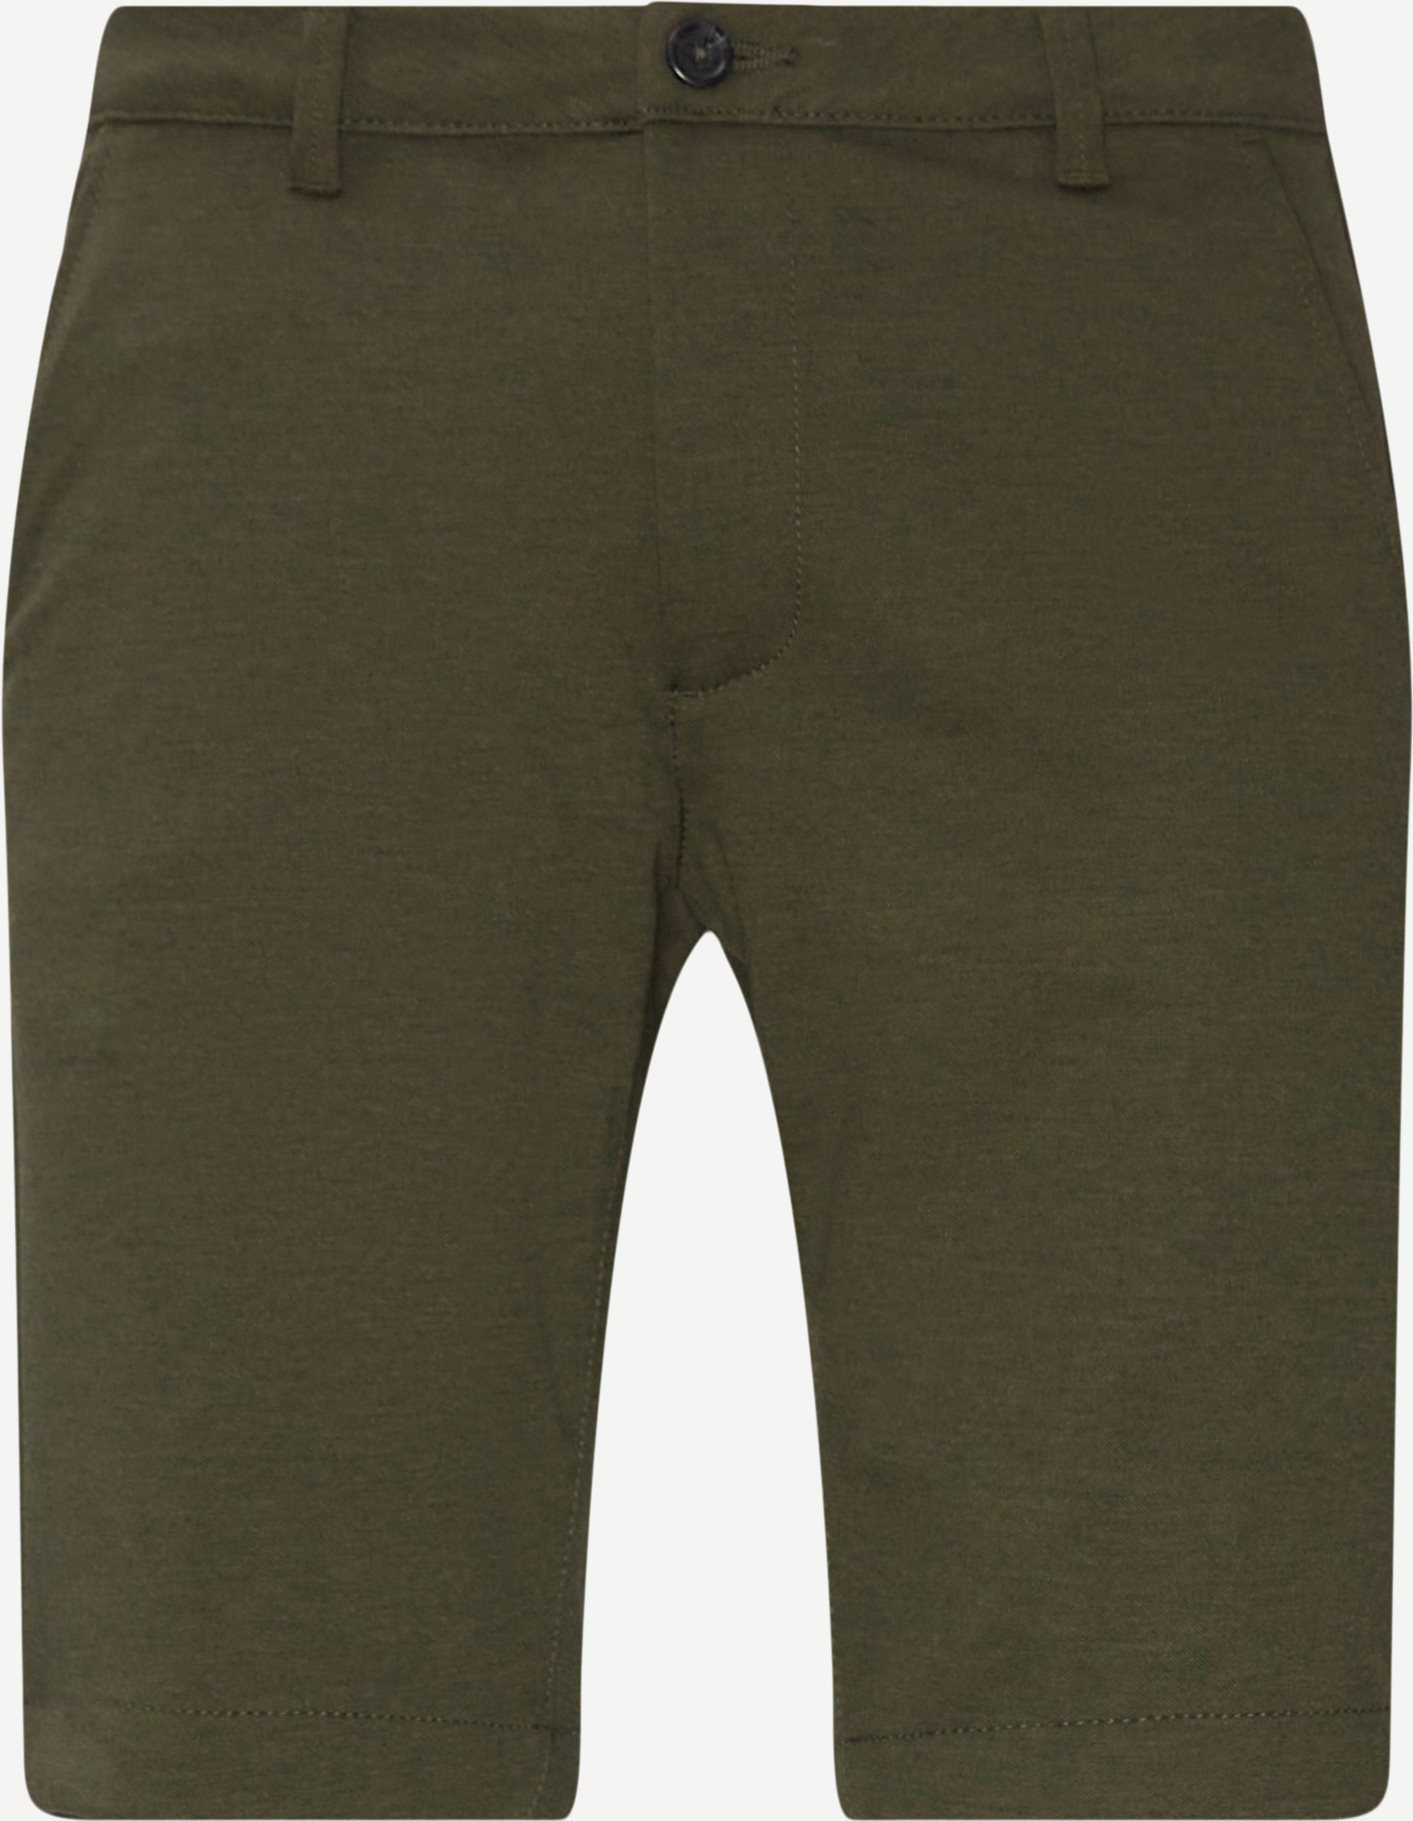 Shorts - Regular fit - Army